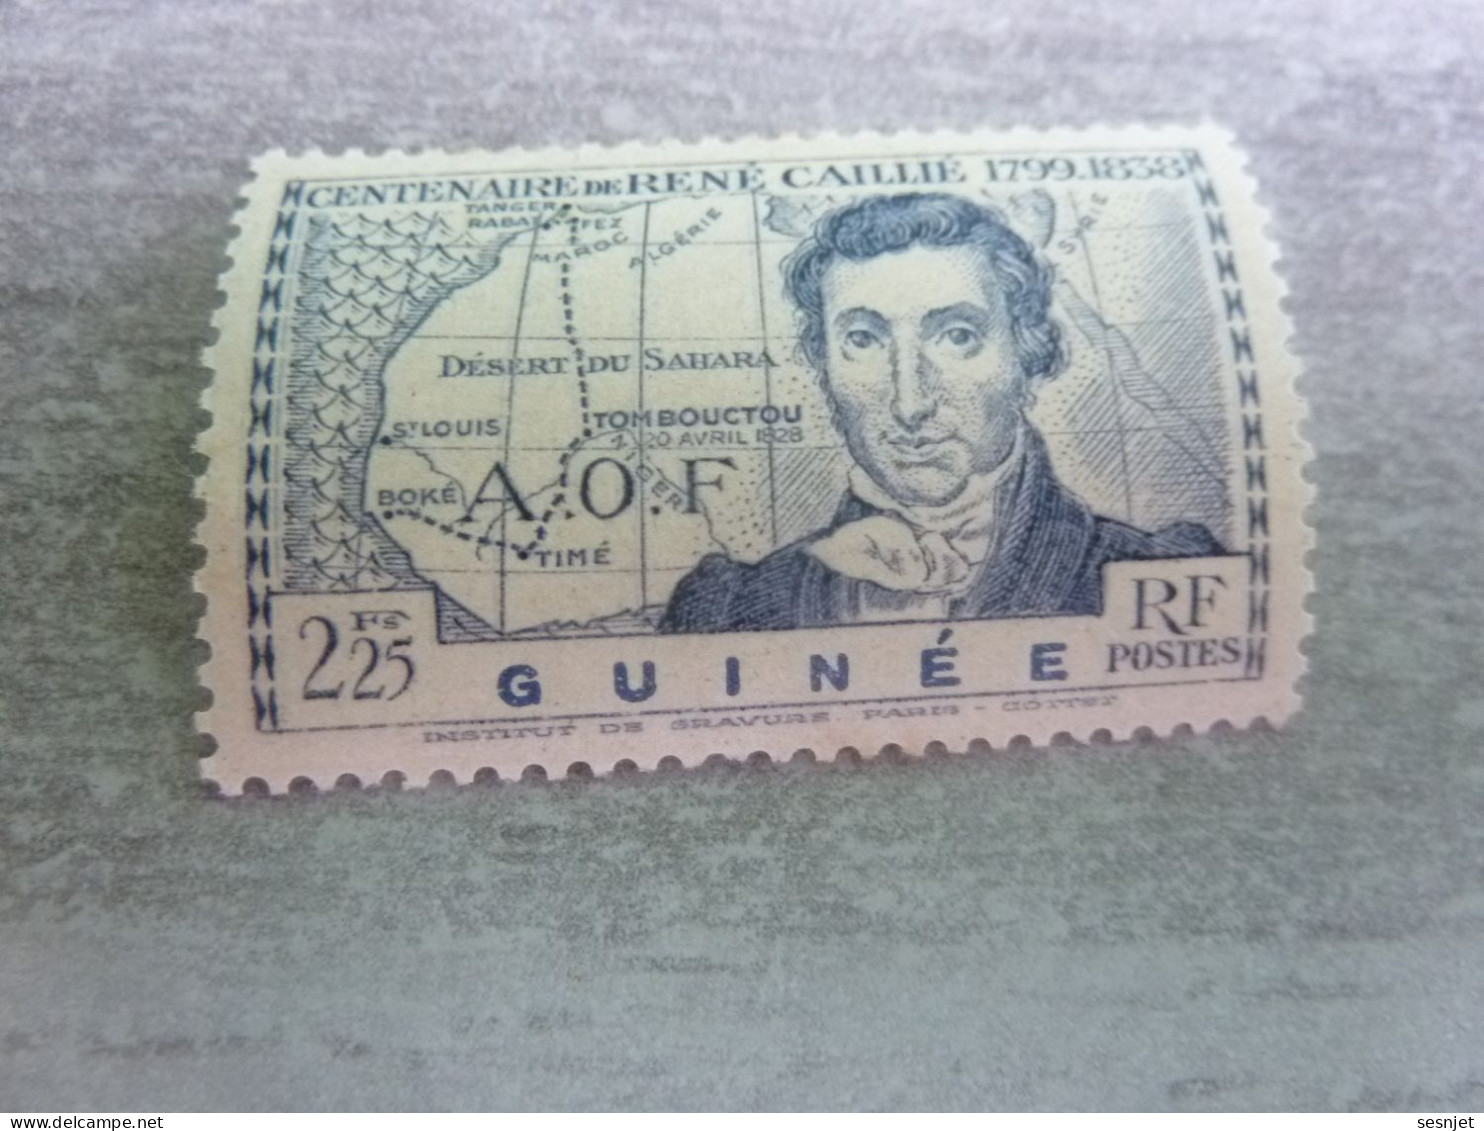 René Caillié (1709-1838) - A.o.f. - Guinée - 2f.25 - Yt 150 - Outremer - Neuf Sans Trace - Année 1939 - - Neufs